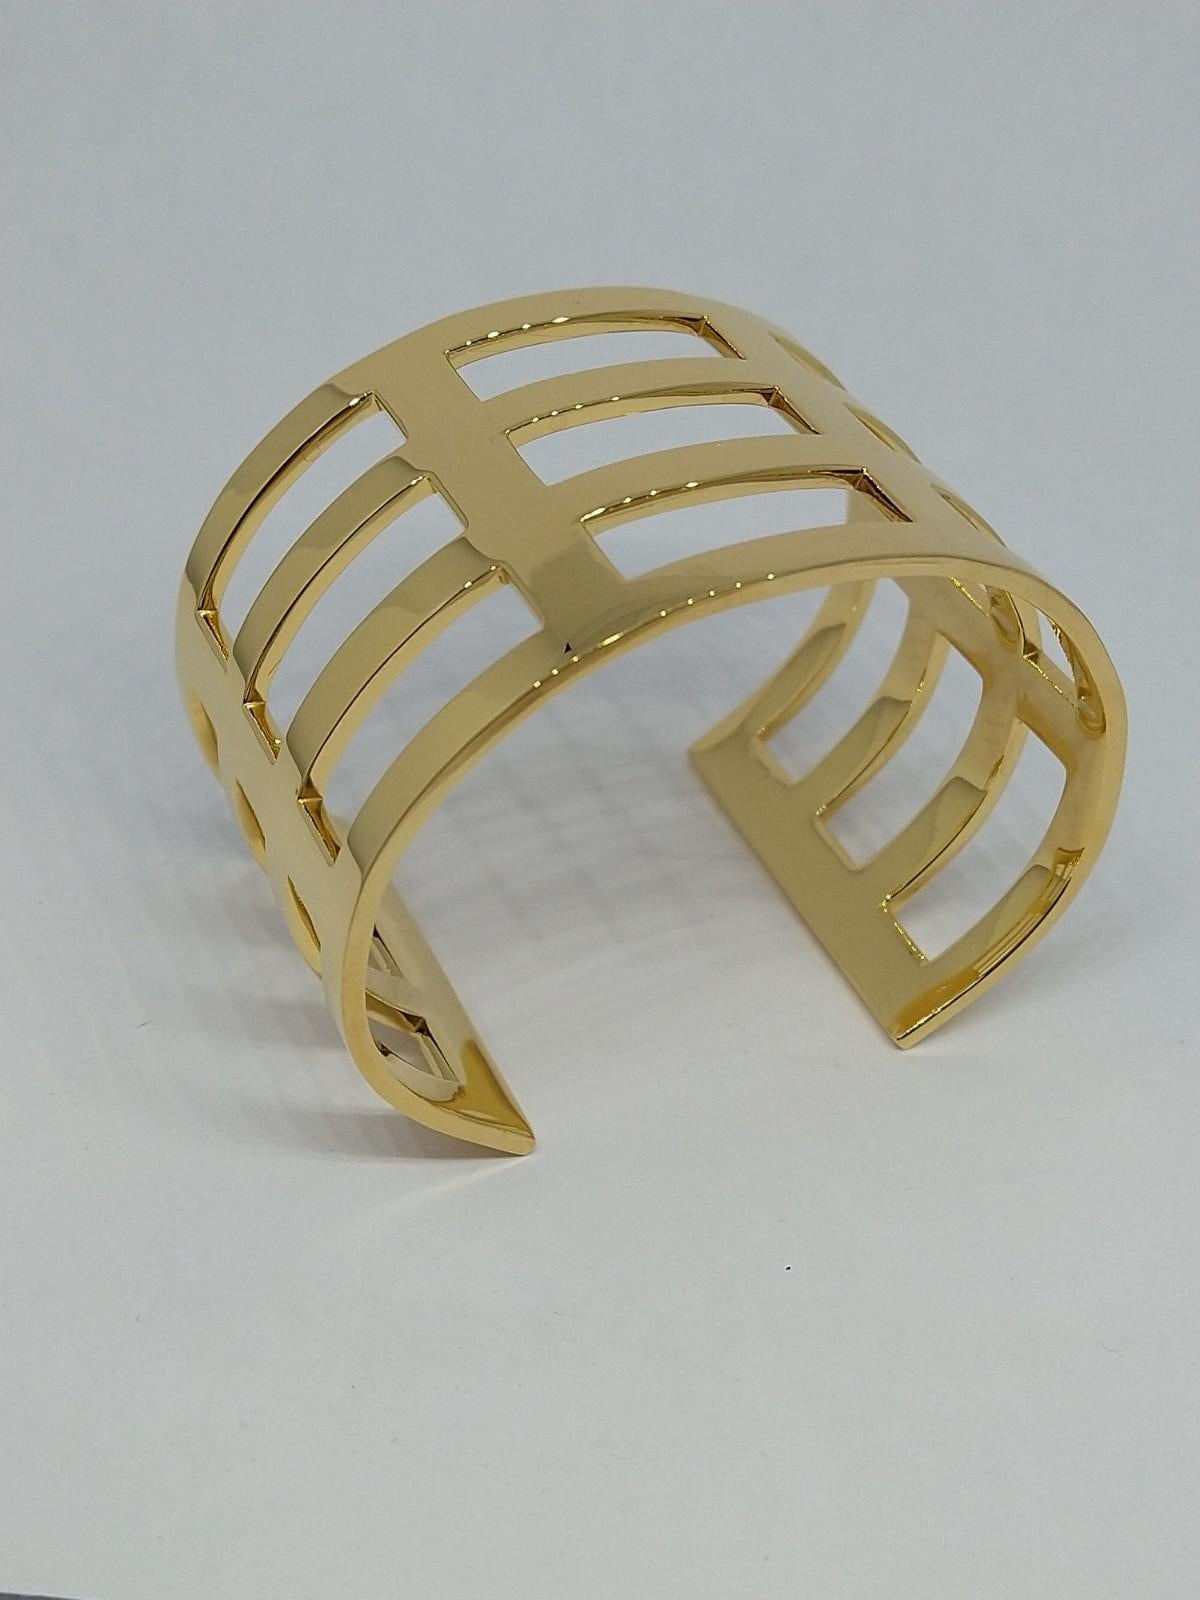 14k yellow gold vermeil silhouette cuff bracelet